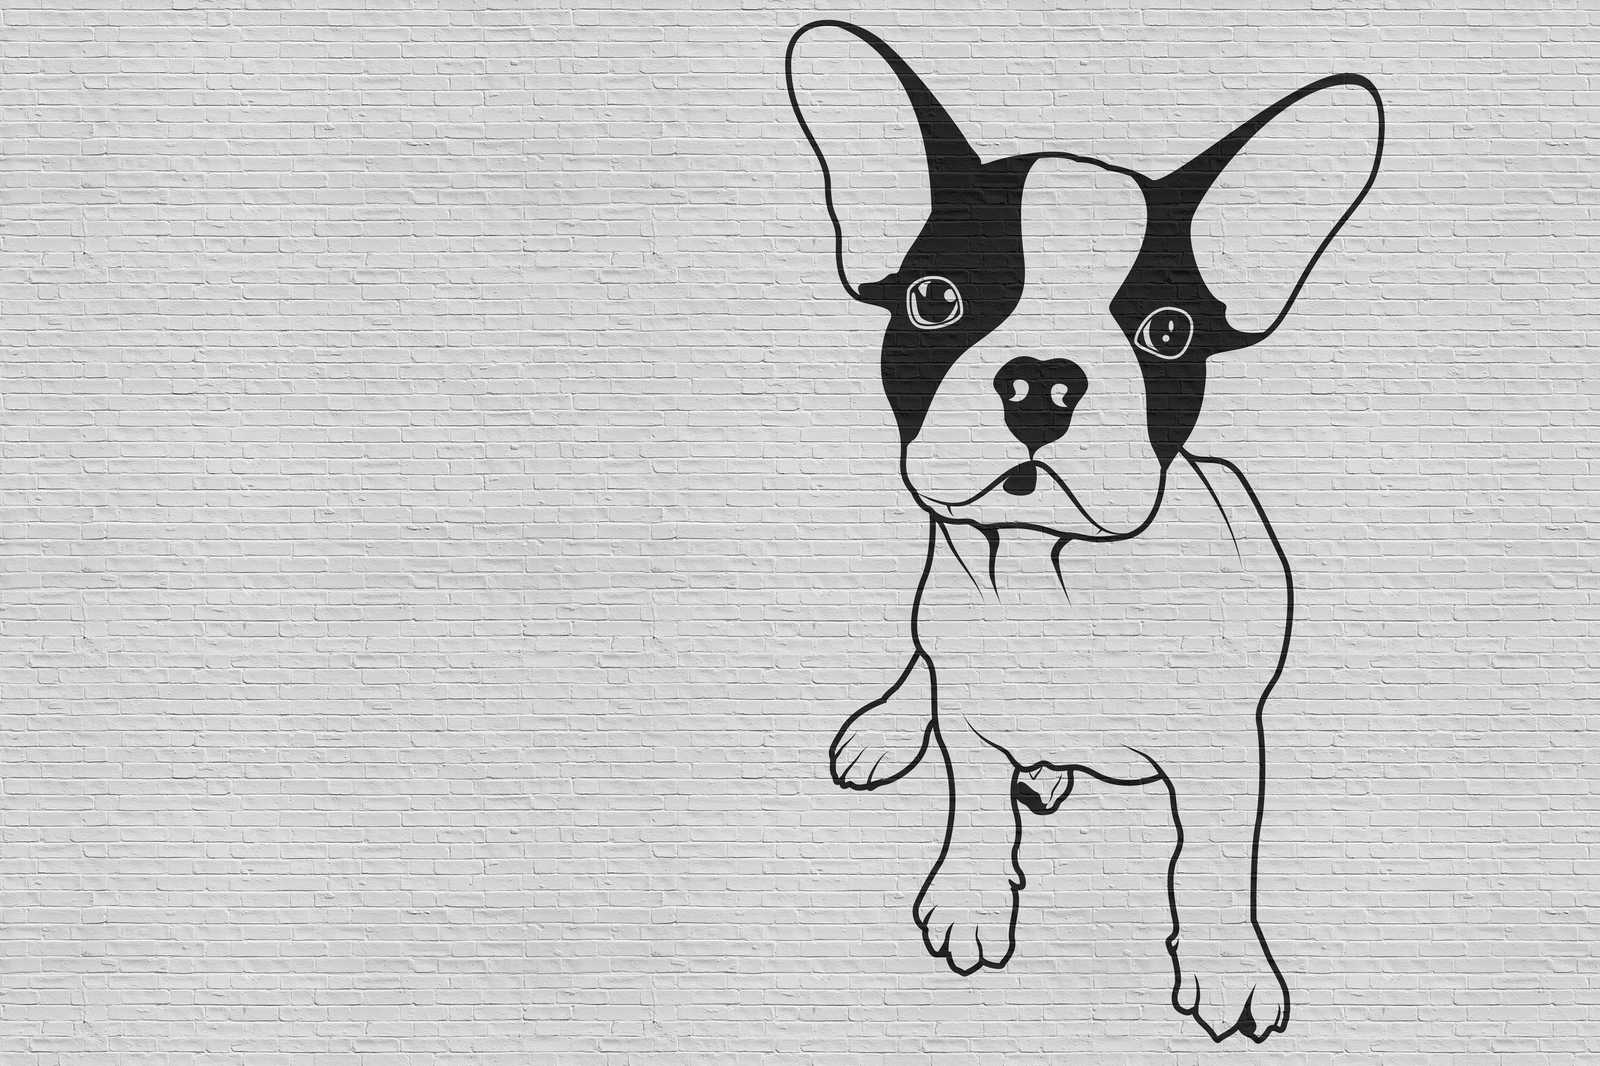             Tattoo you 2 - Pintura en lienzo bulldog francés, blanco y negro - 0,90 m x 0,60 m
        